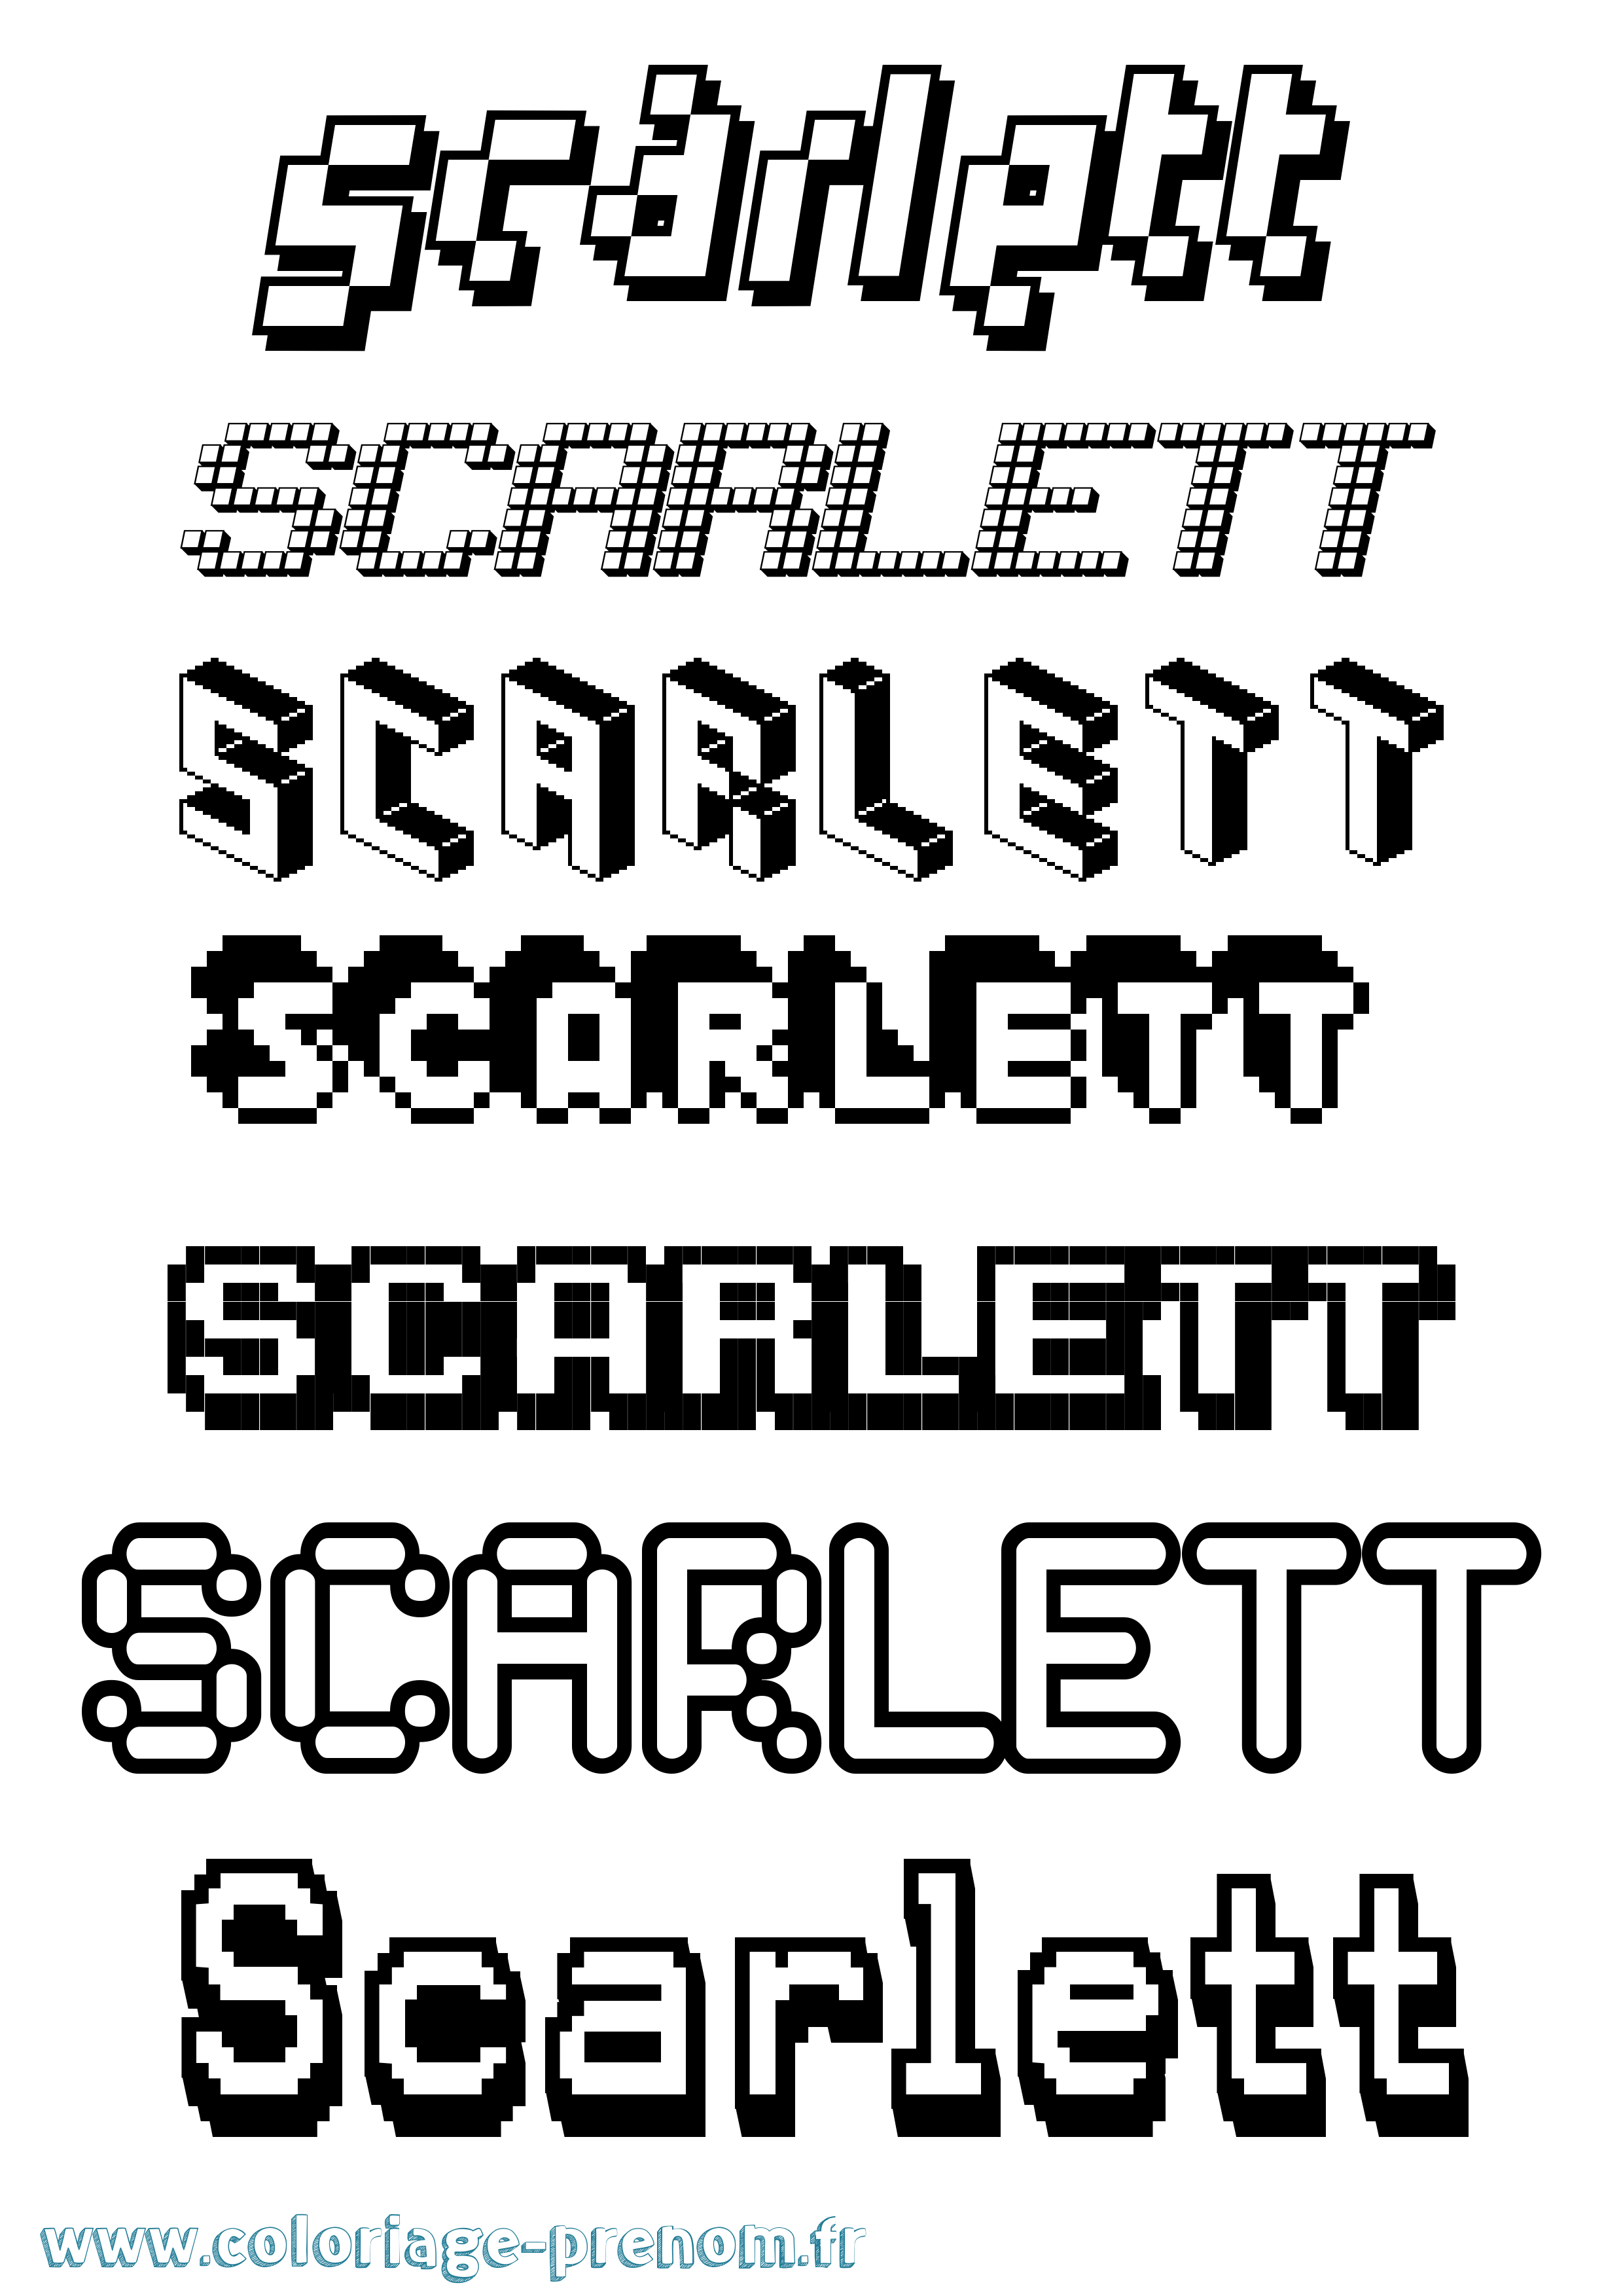 Coloriage prénom Scarlett Pixel